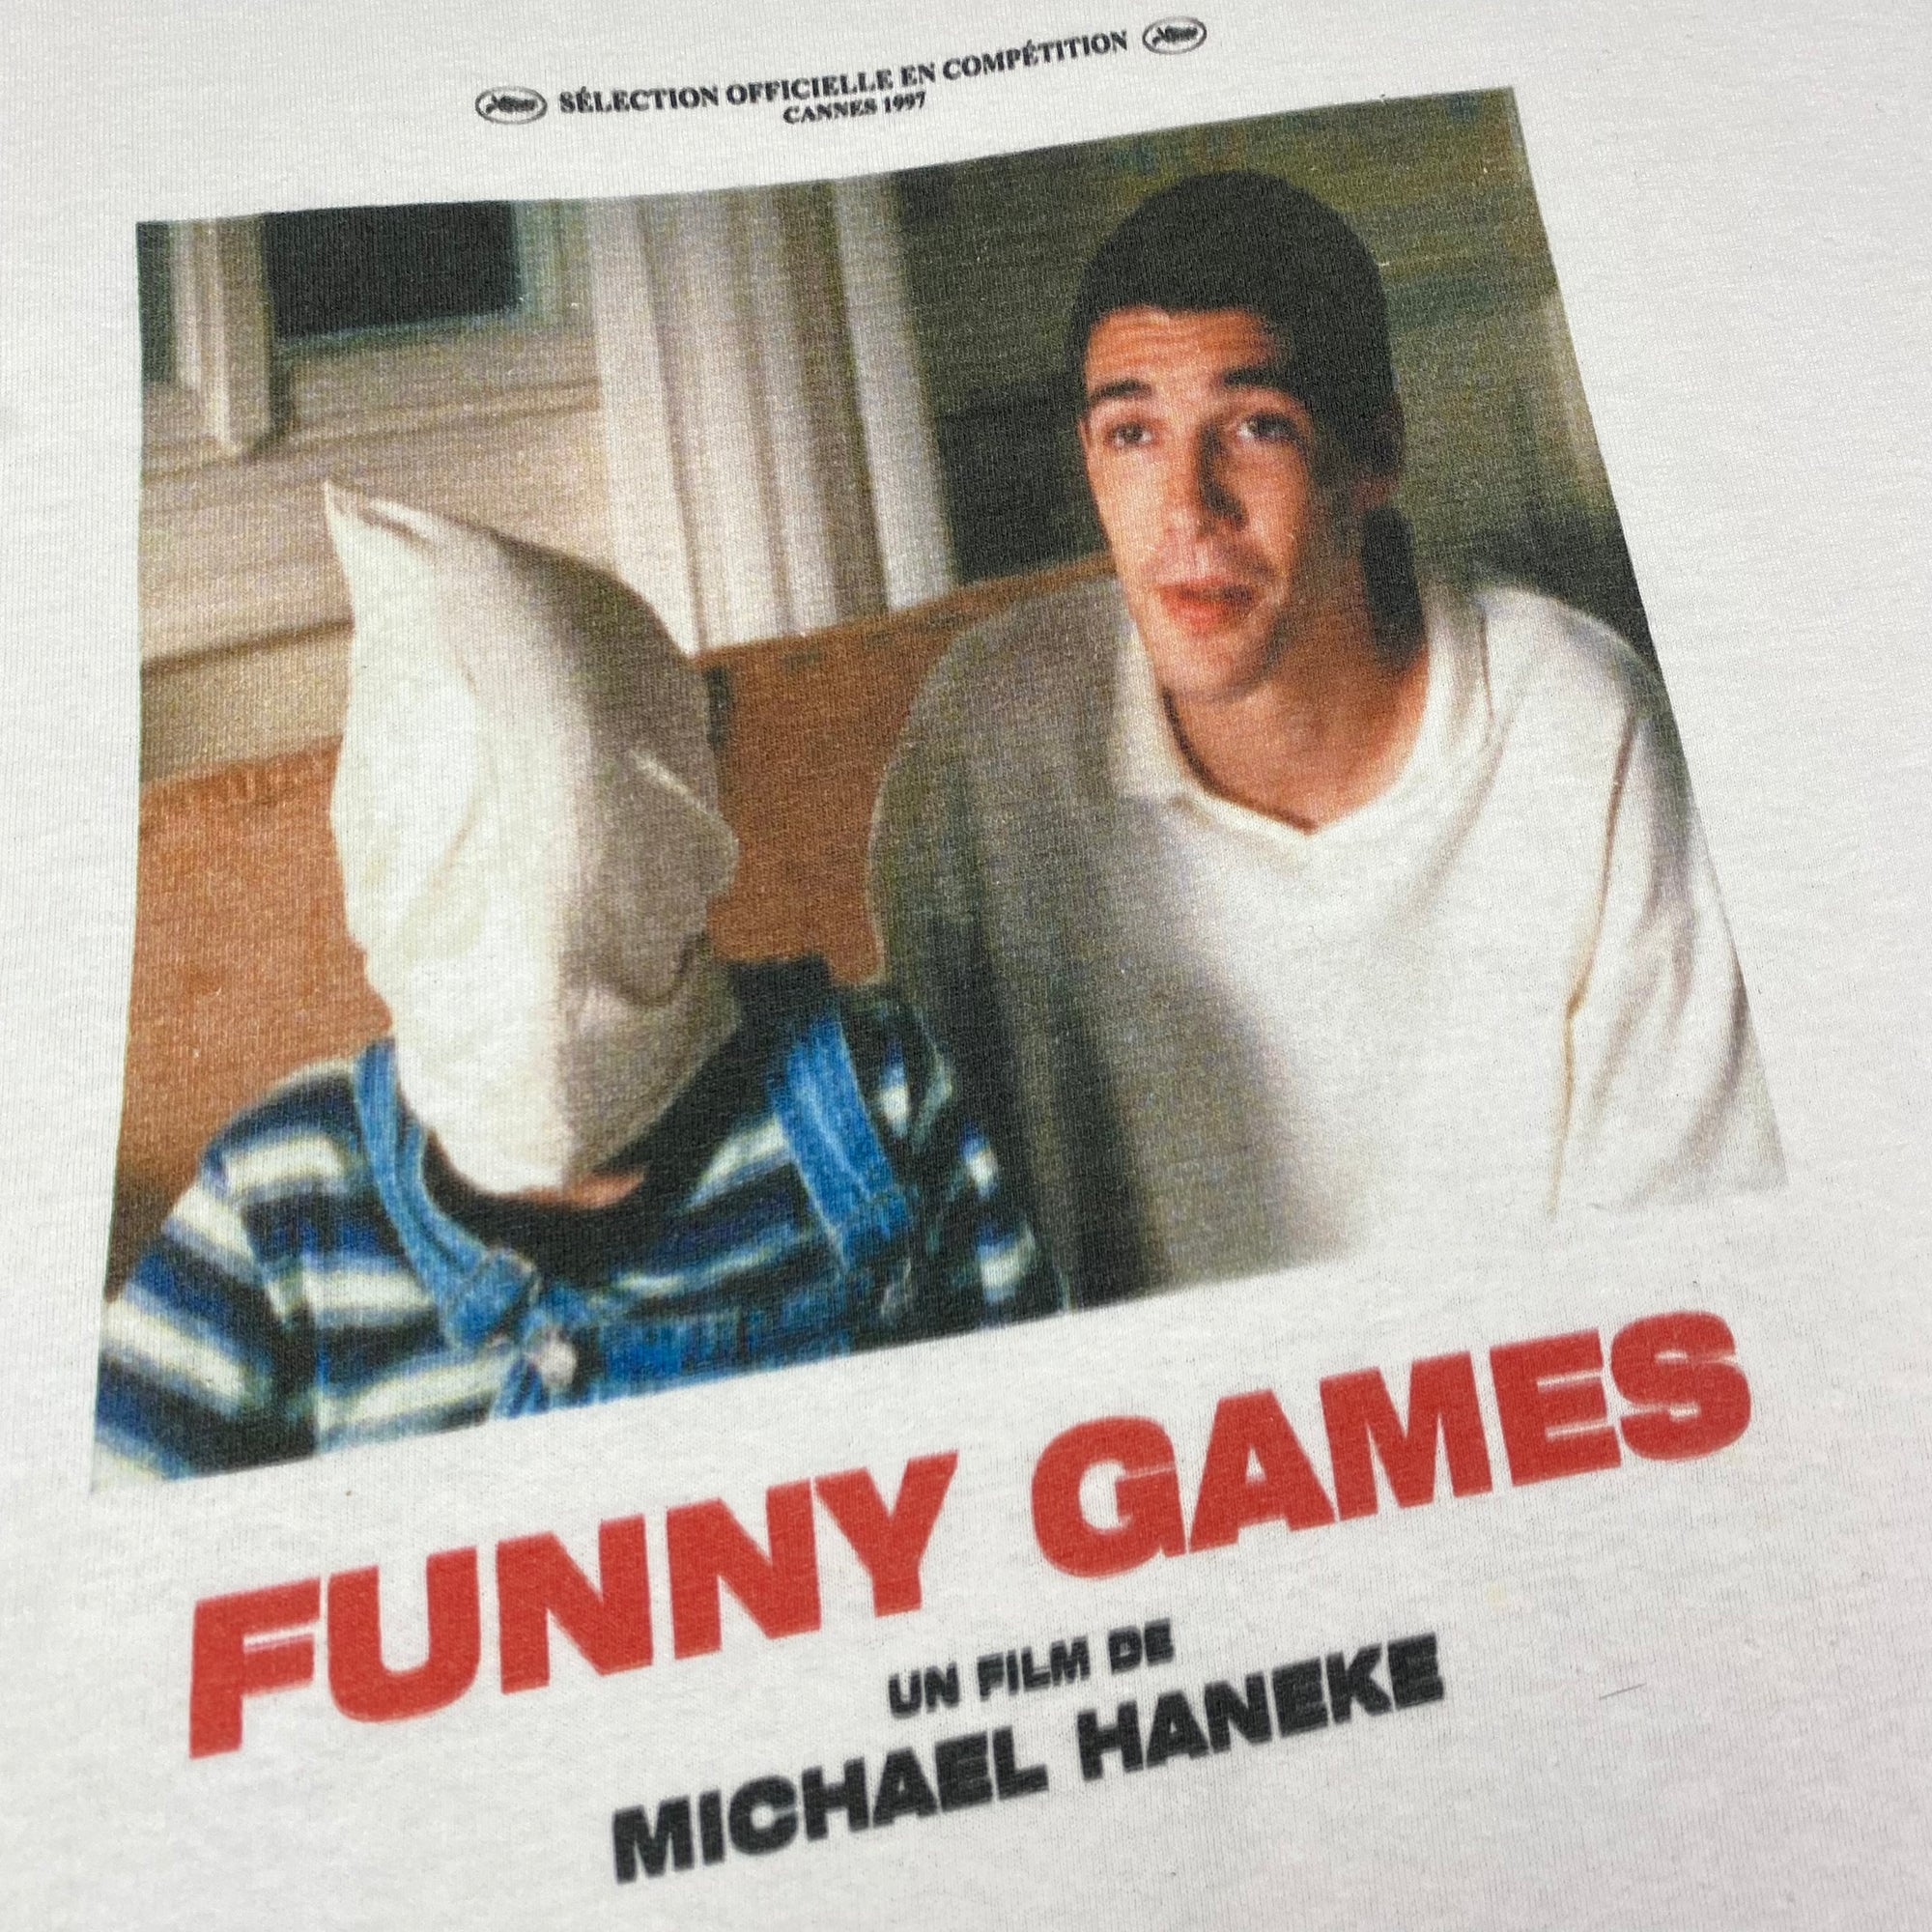 Funny Games U.S. (2007) White T-Shirt Print #456937 Online